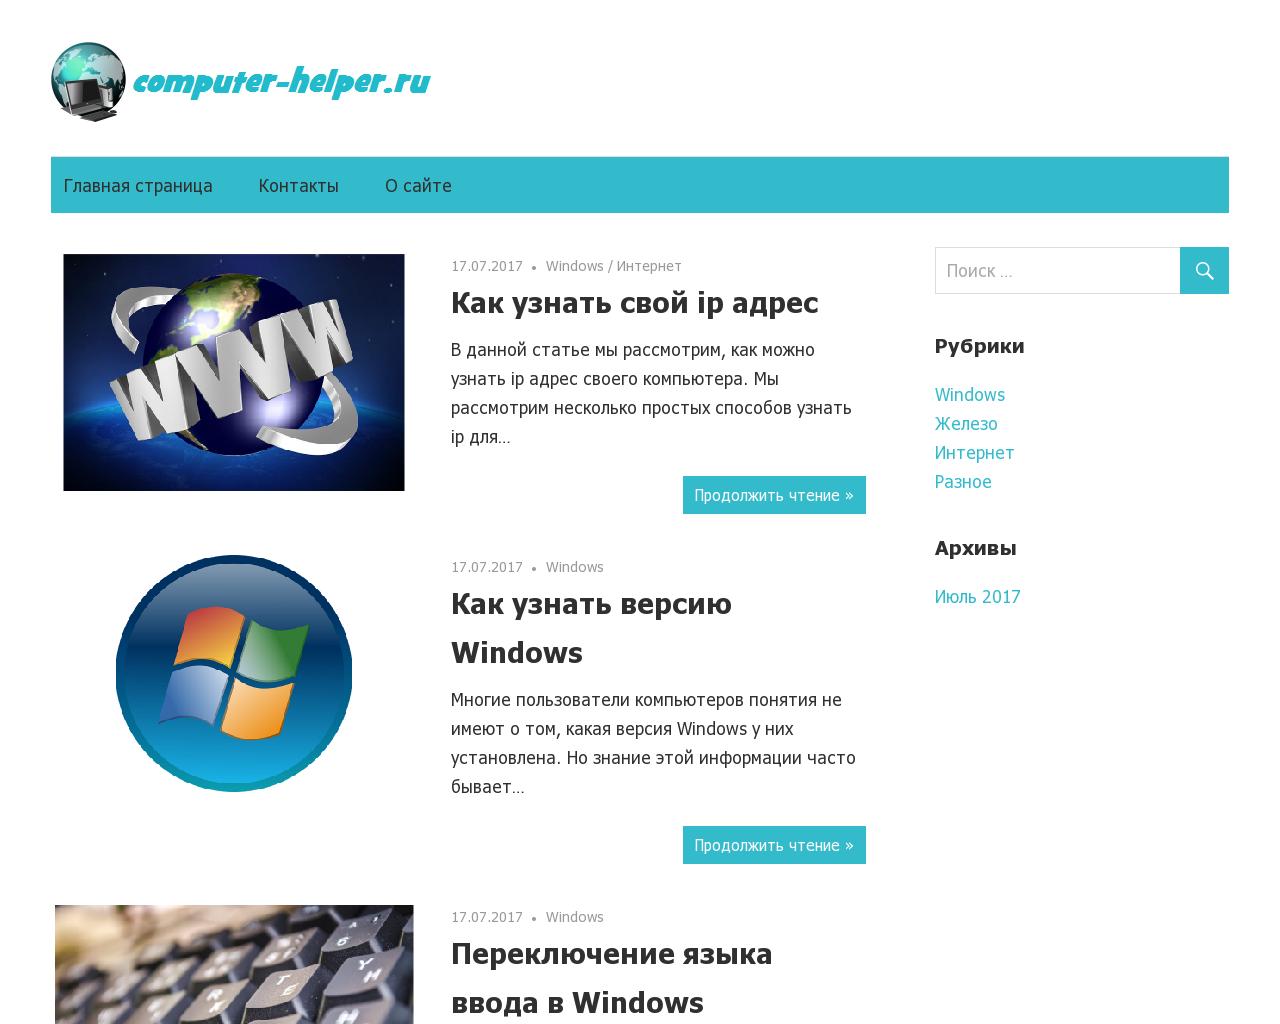 Изображение сайта computer-helper.ru в разрешении 1280x1024